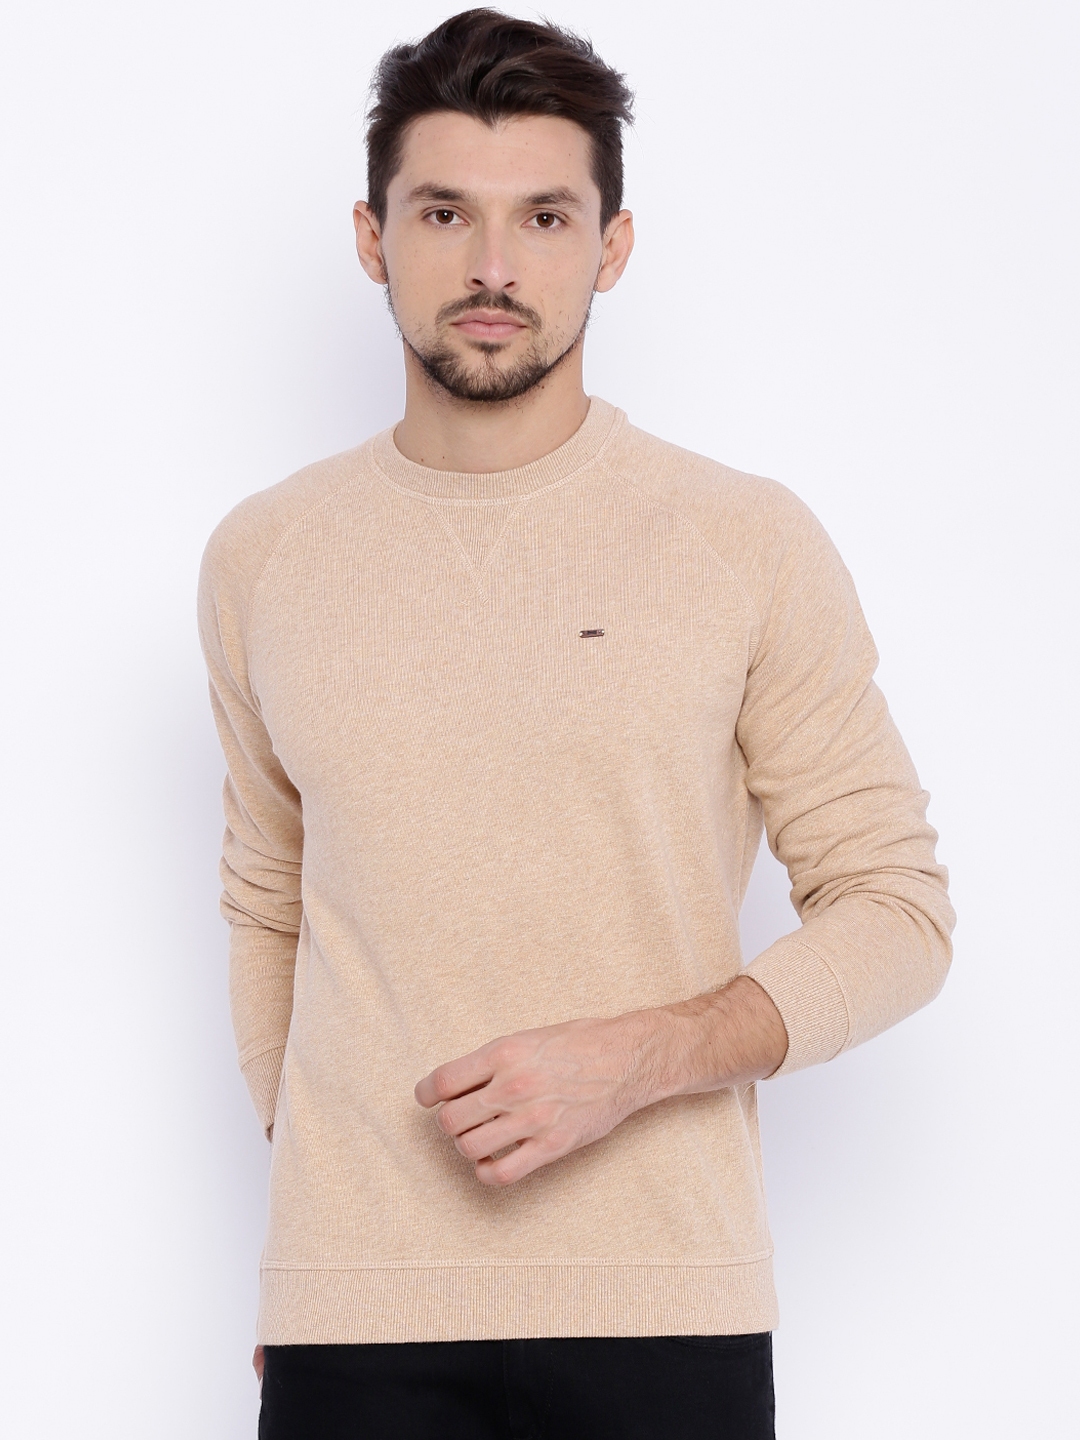 Buy Basics Beige Sweatshirt - Sweatshirts for Men 1701721 | Myntra